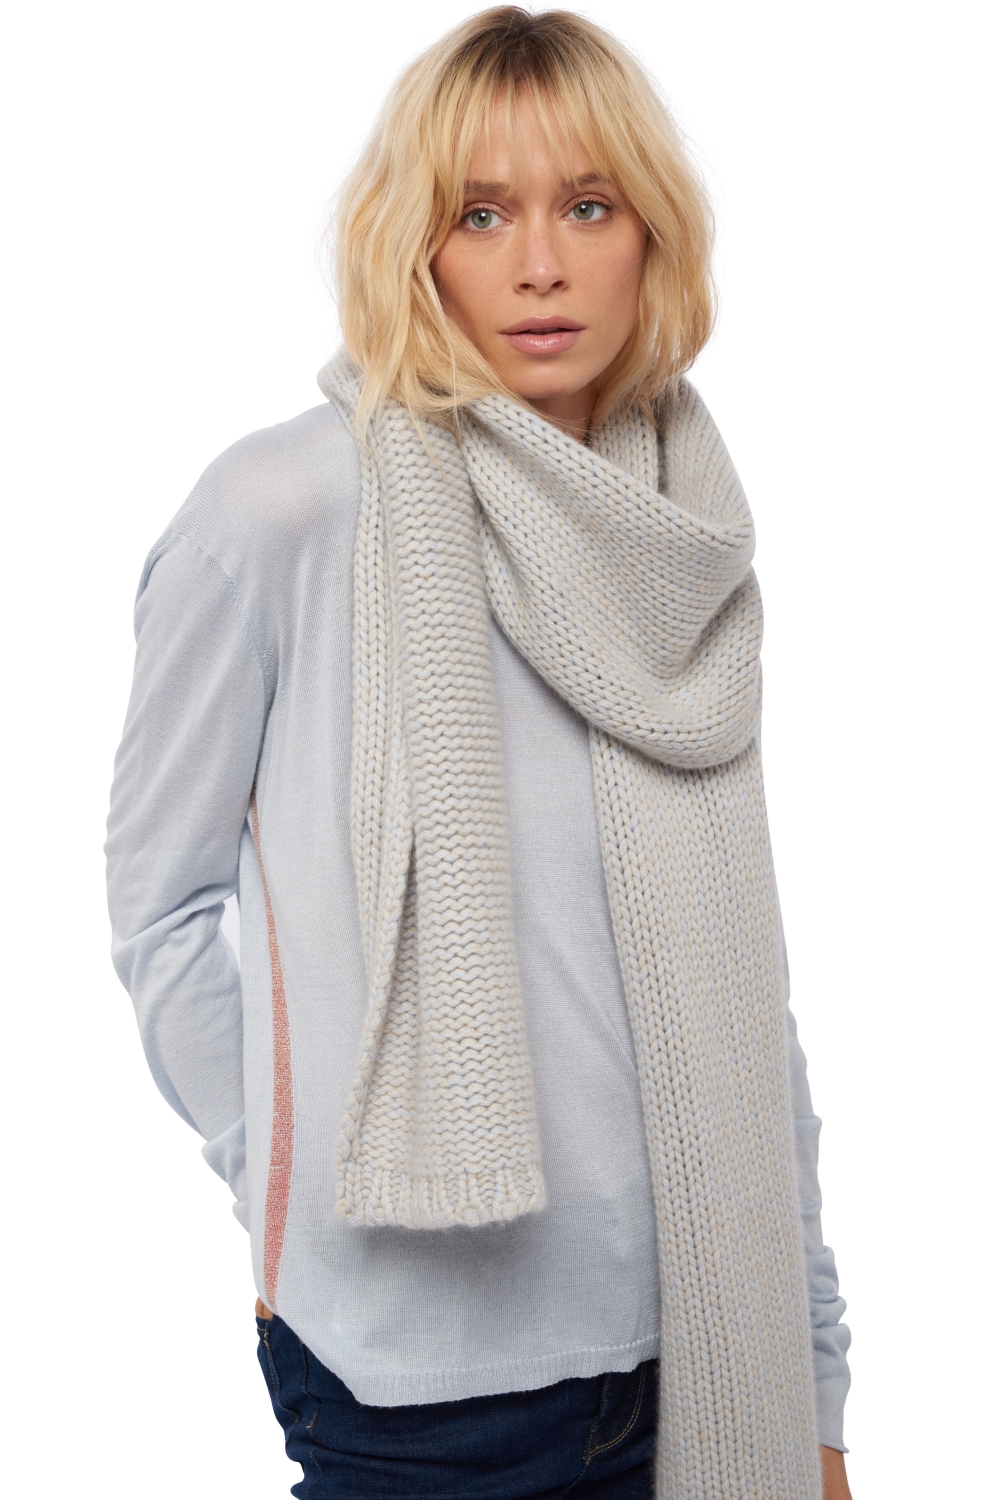 Cashmere ladies scarves mufflers venus ciel natural beige 200 x 38 cm